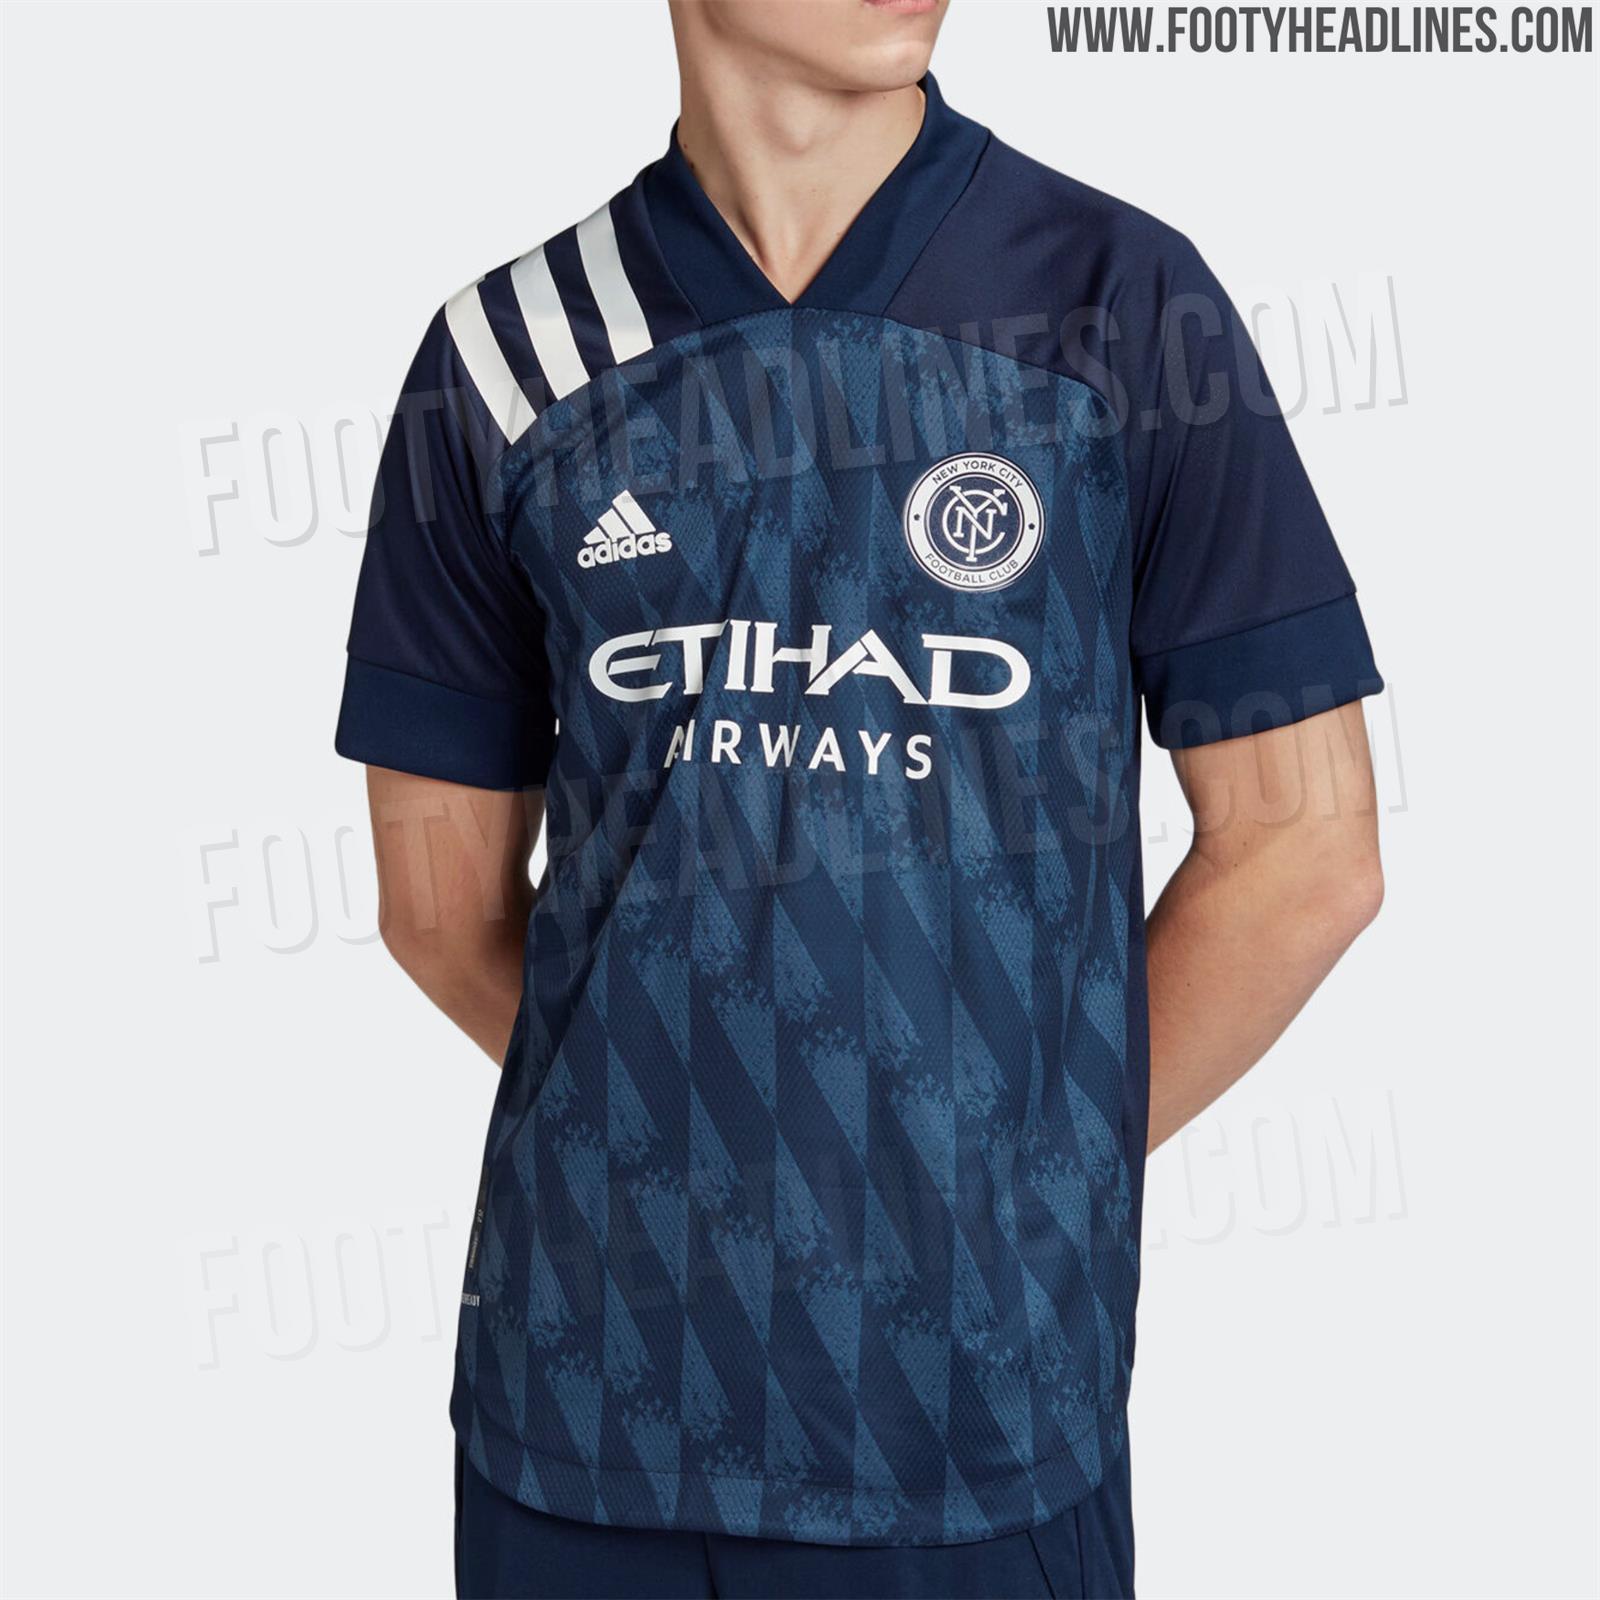 New York City FC unveil 2020 away kit - Hudson River Blue